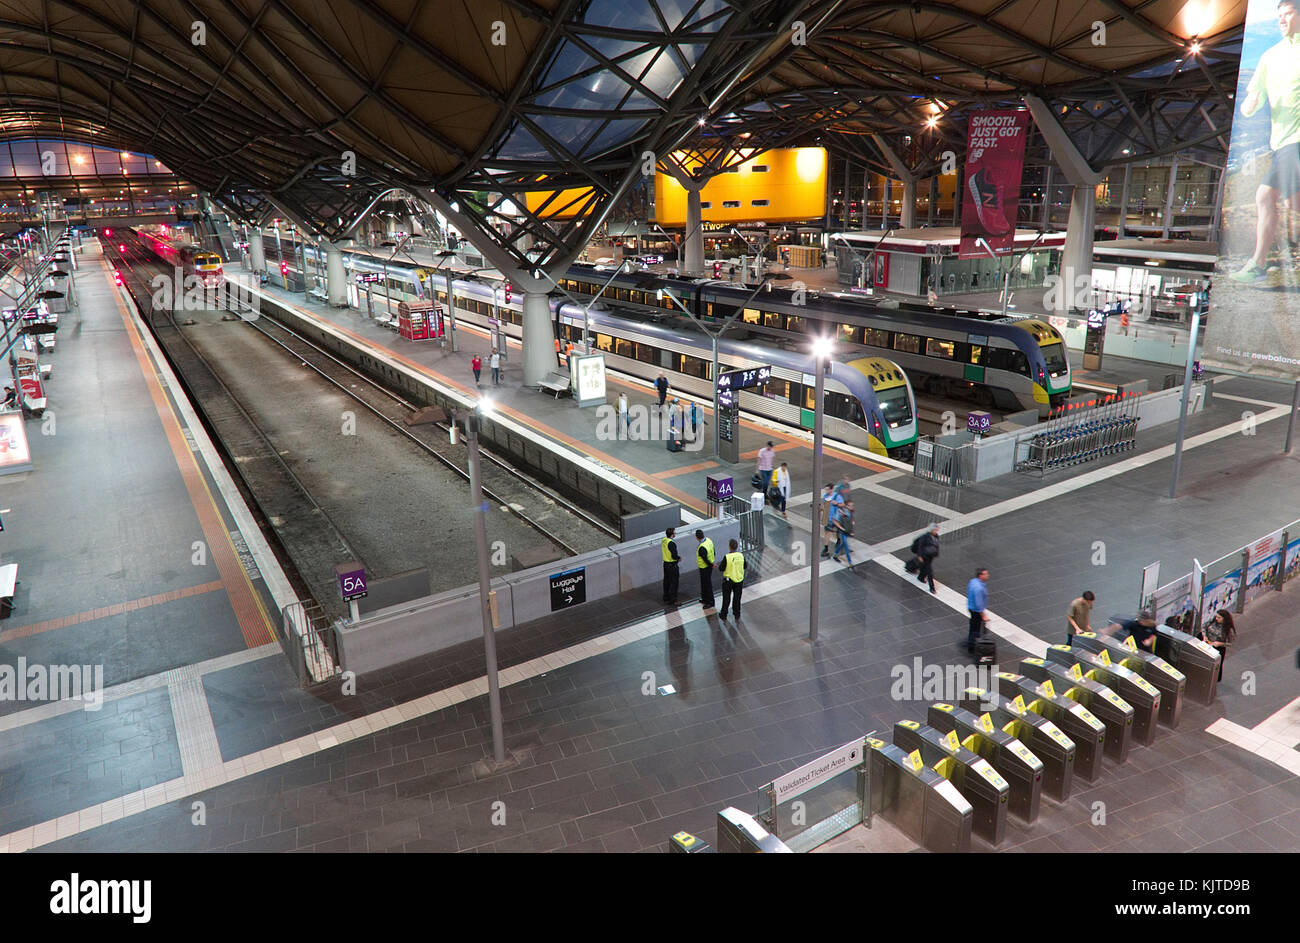 Interior of the Southern Cross Railway Station Melbourne Victoria Australia Stock Photo